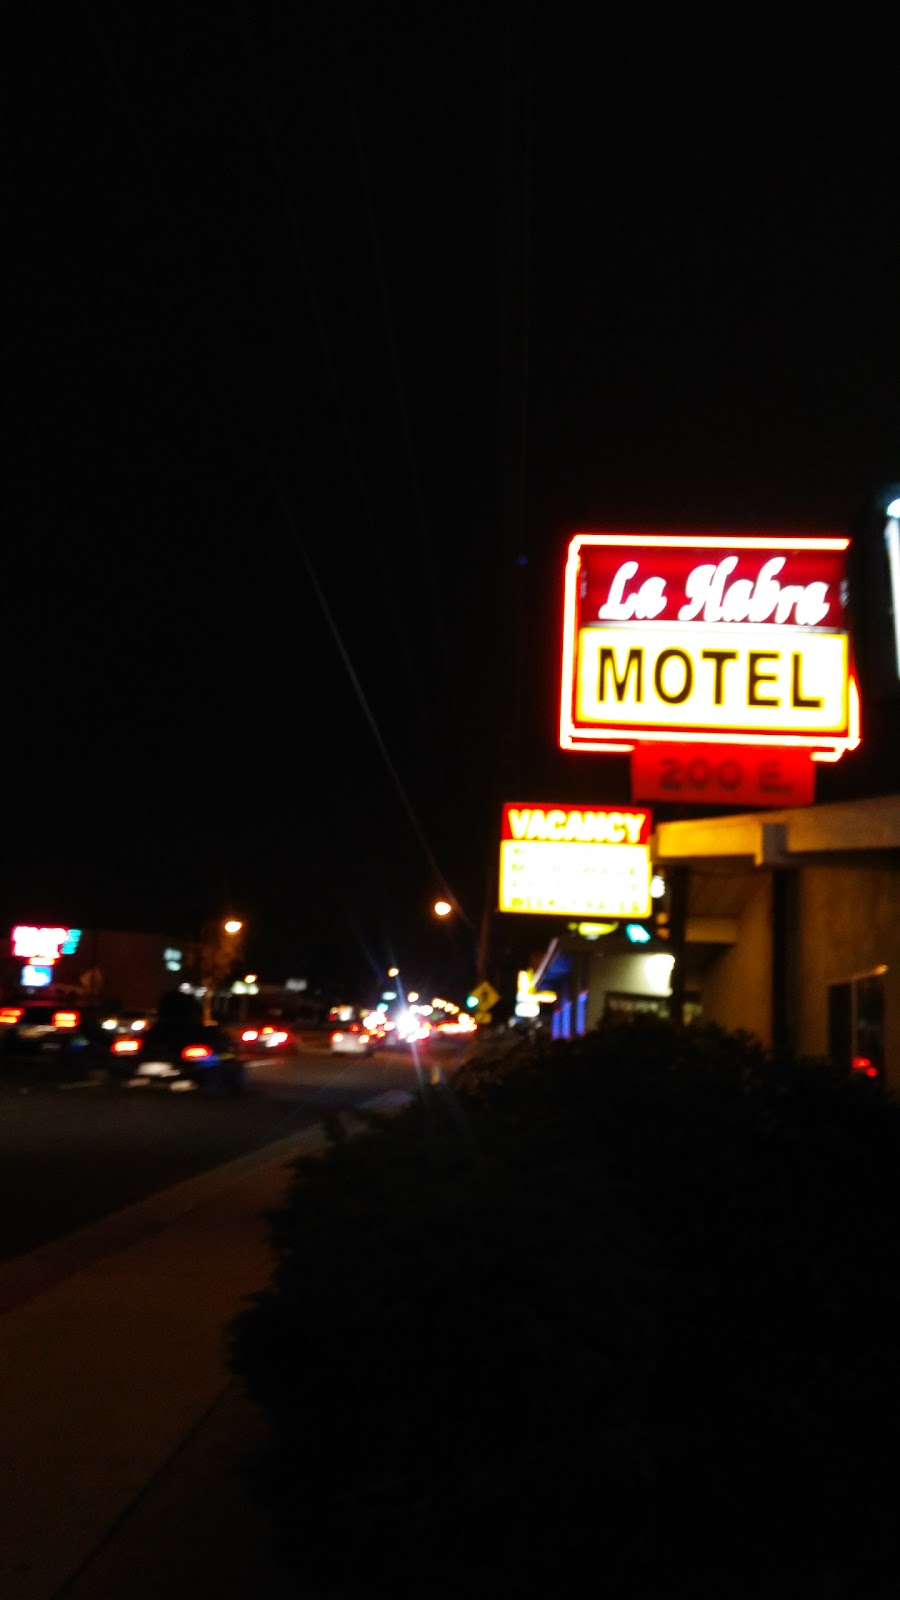 La Habra Motel | 200 E Whittier Blvd, La Habra, CA 90631 | Phone: (562) 697-0714